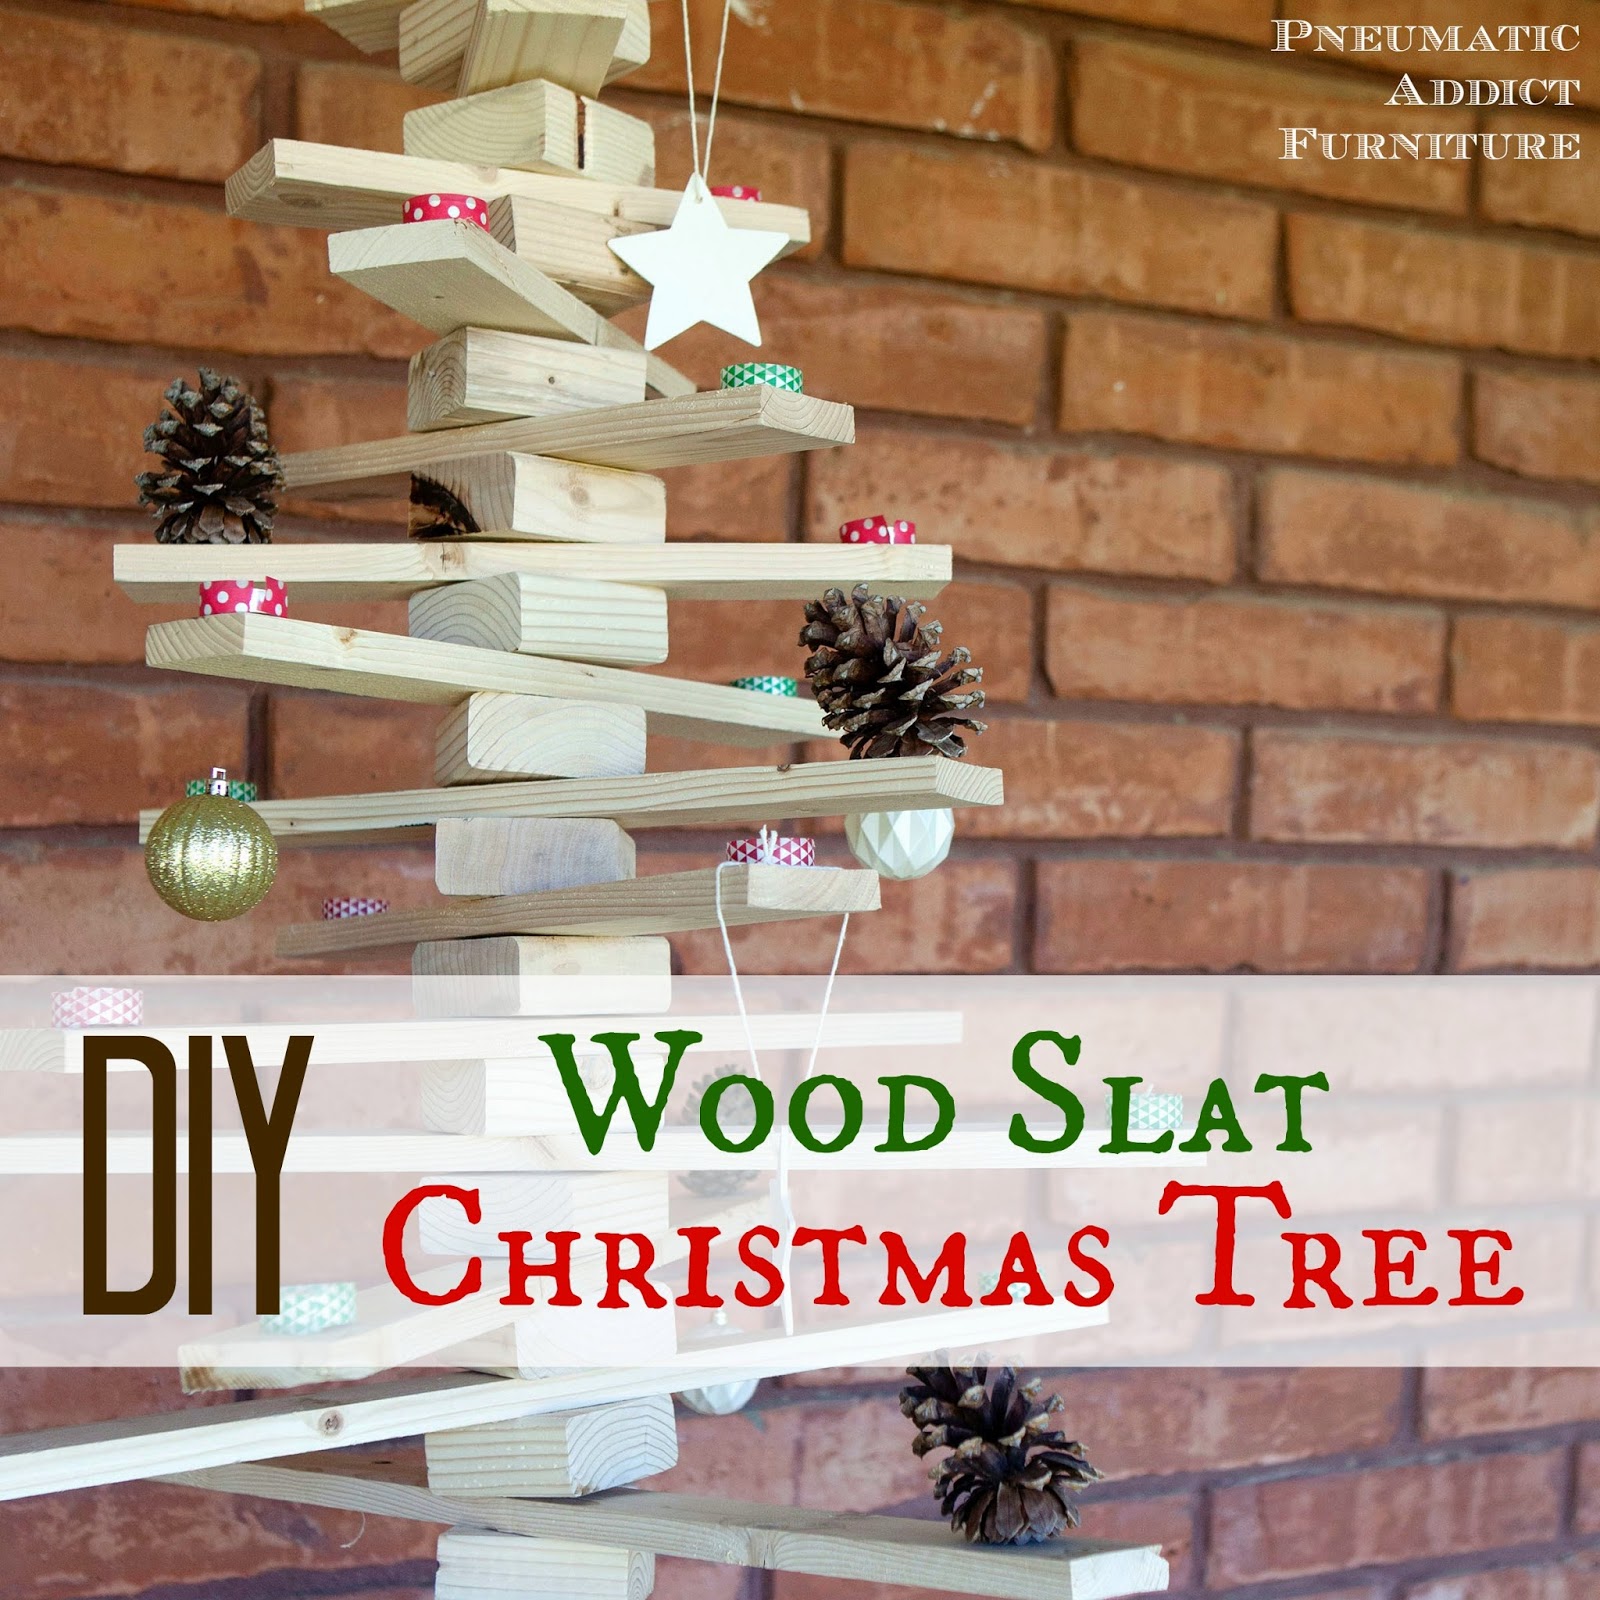 DIY Wood Slat Christmas Tree | Pneumatic Addict